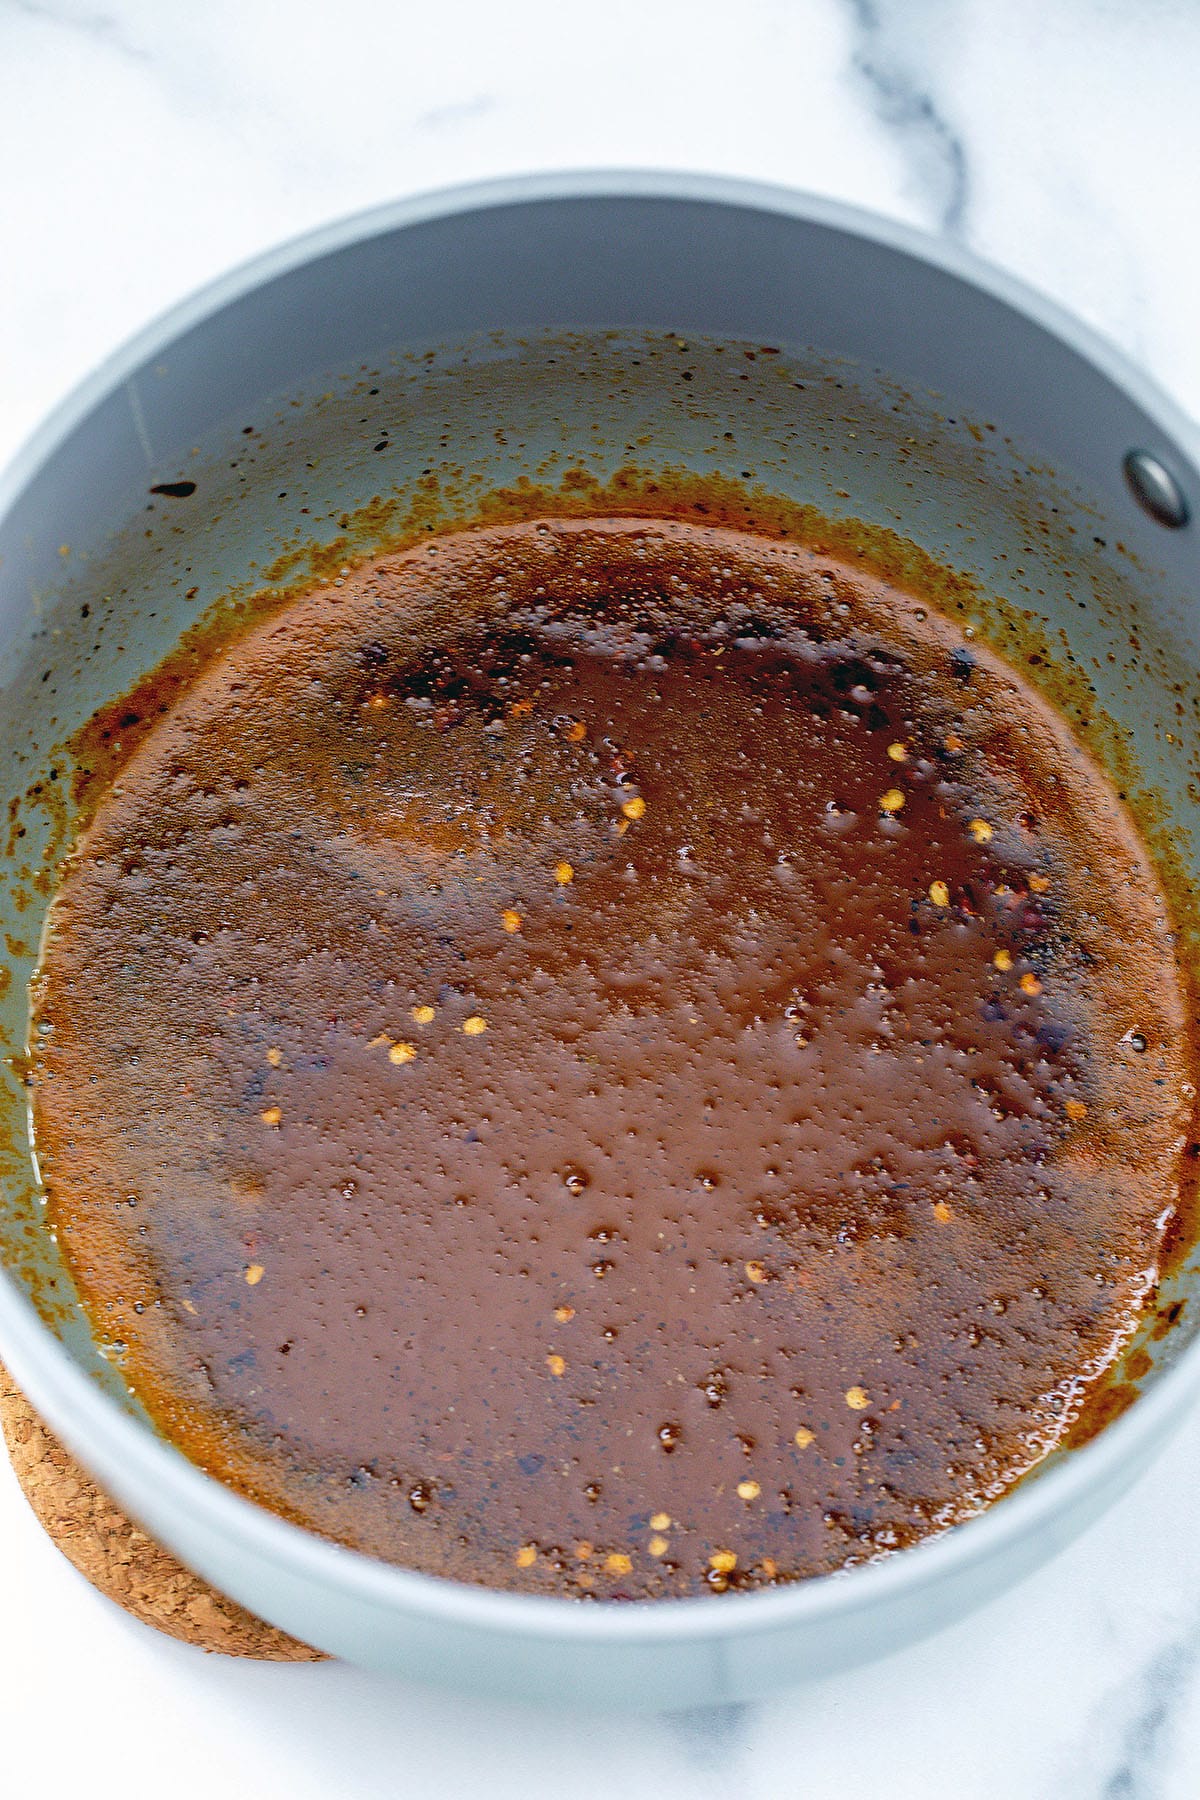 Hot honey sauce simmering in saucepan.